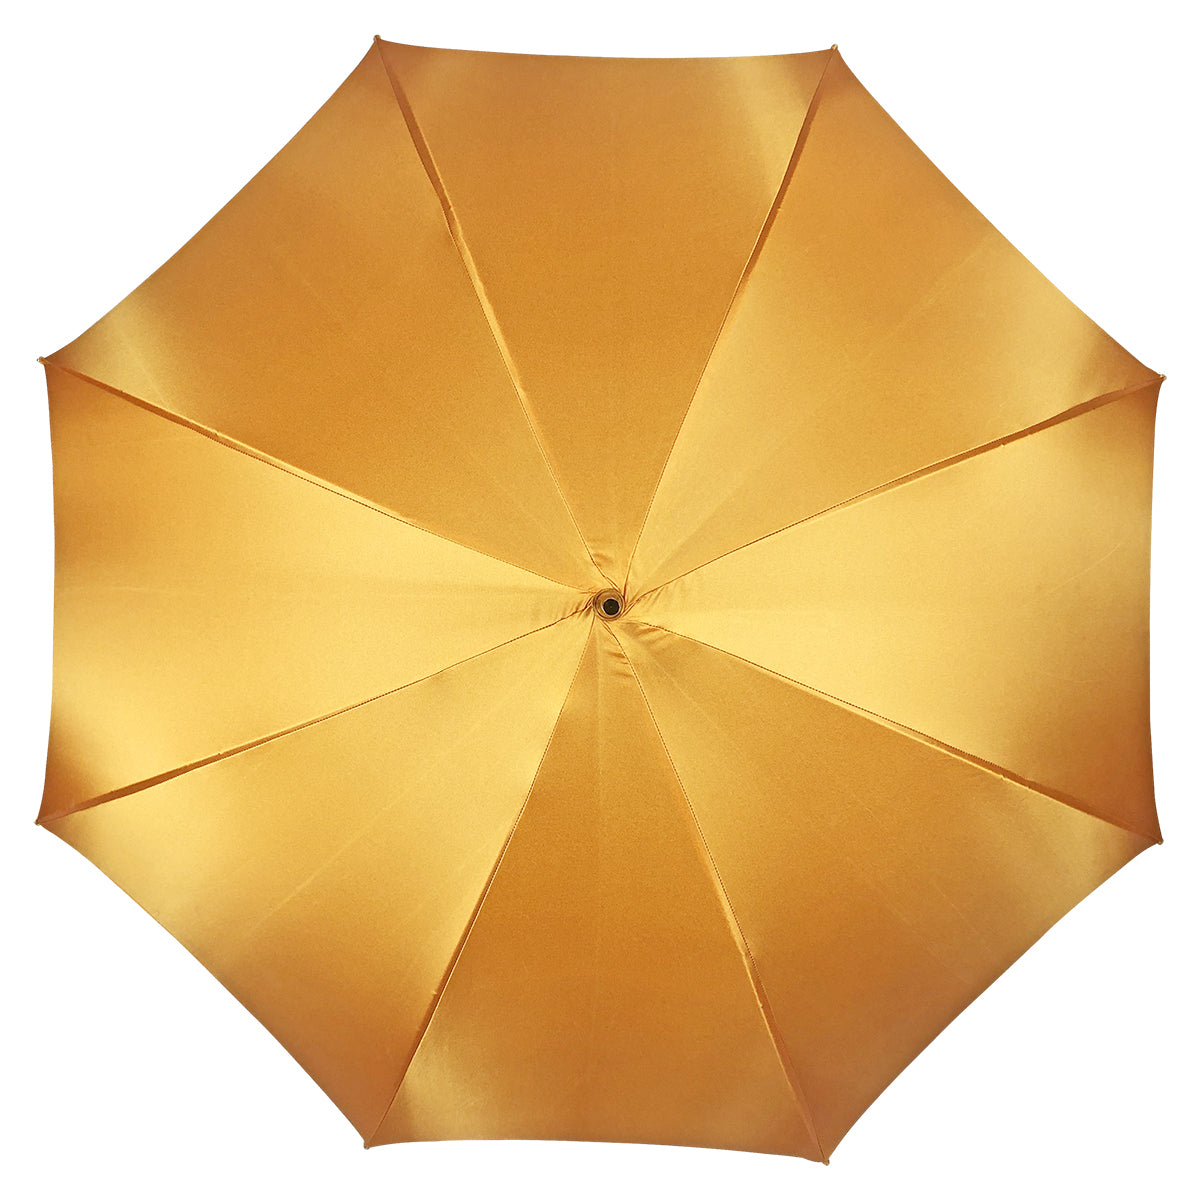 Fantastic Orange umbrella with leopard print